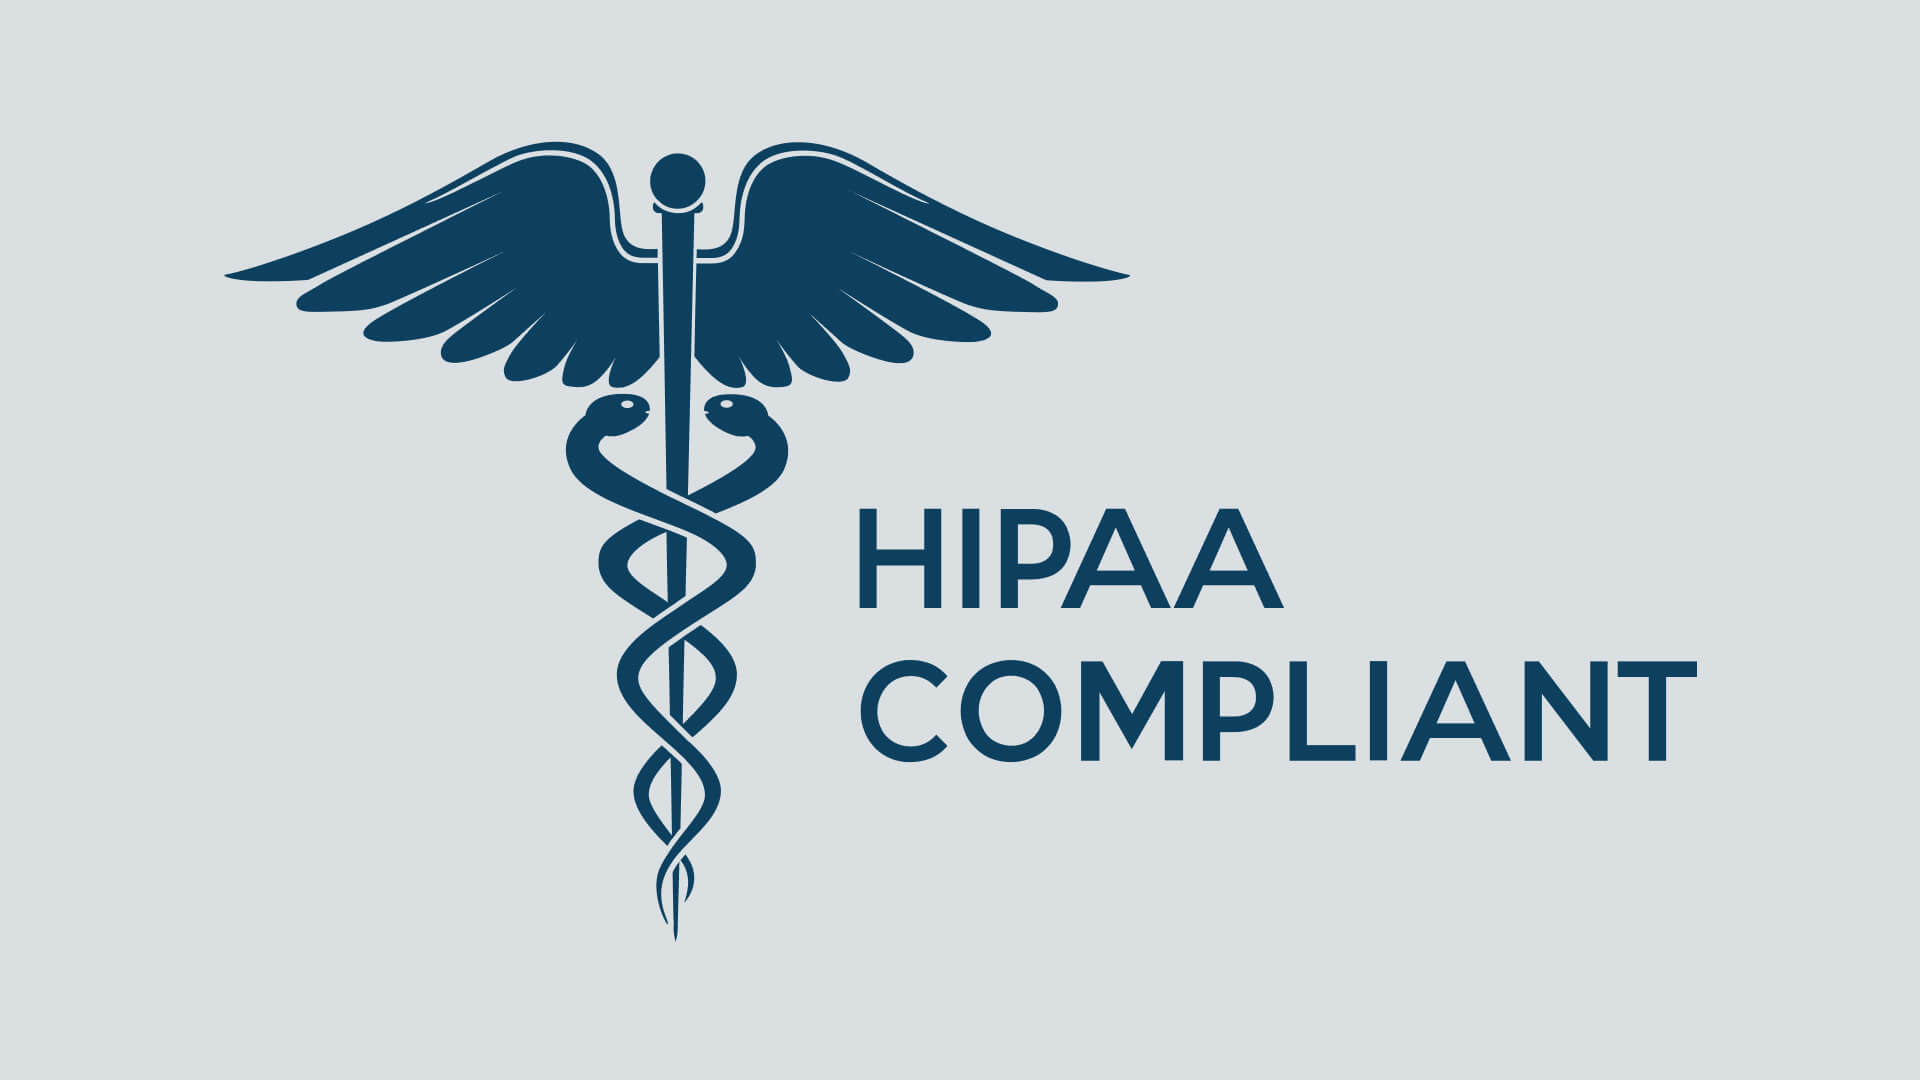 hipaa compliant logo on a gray background